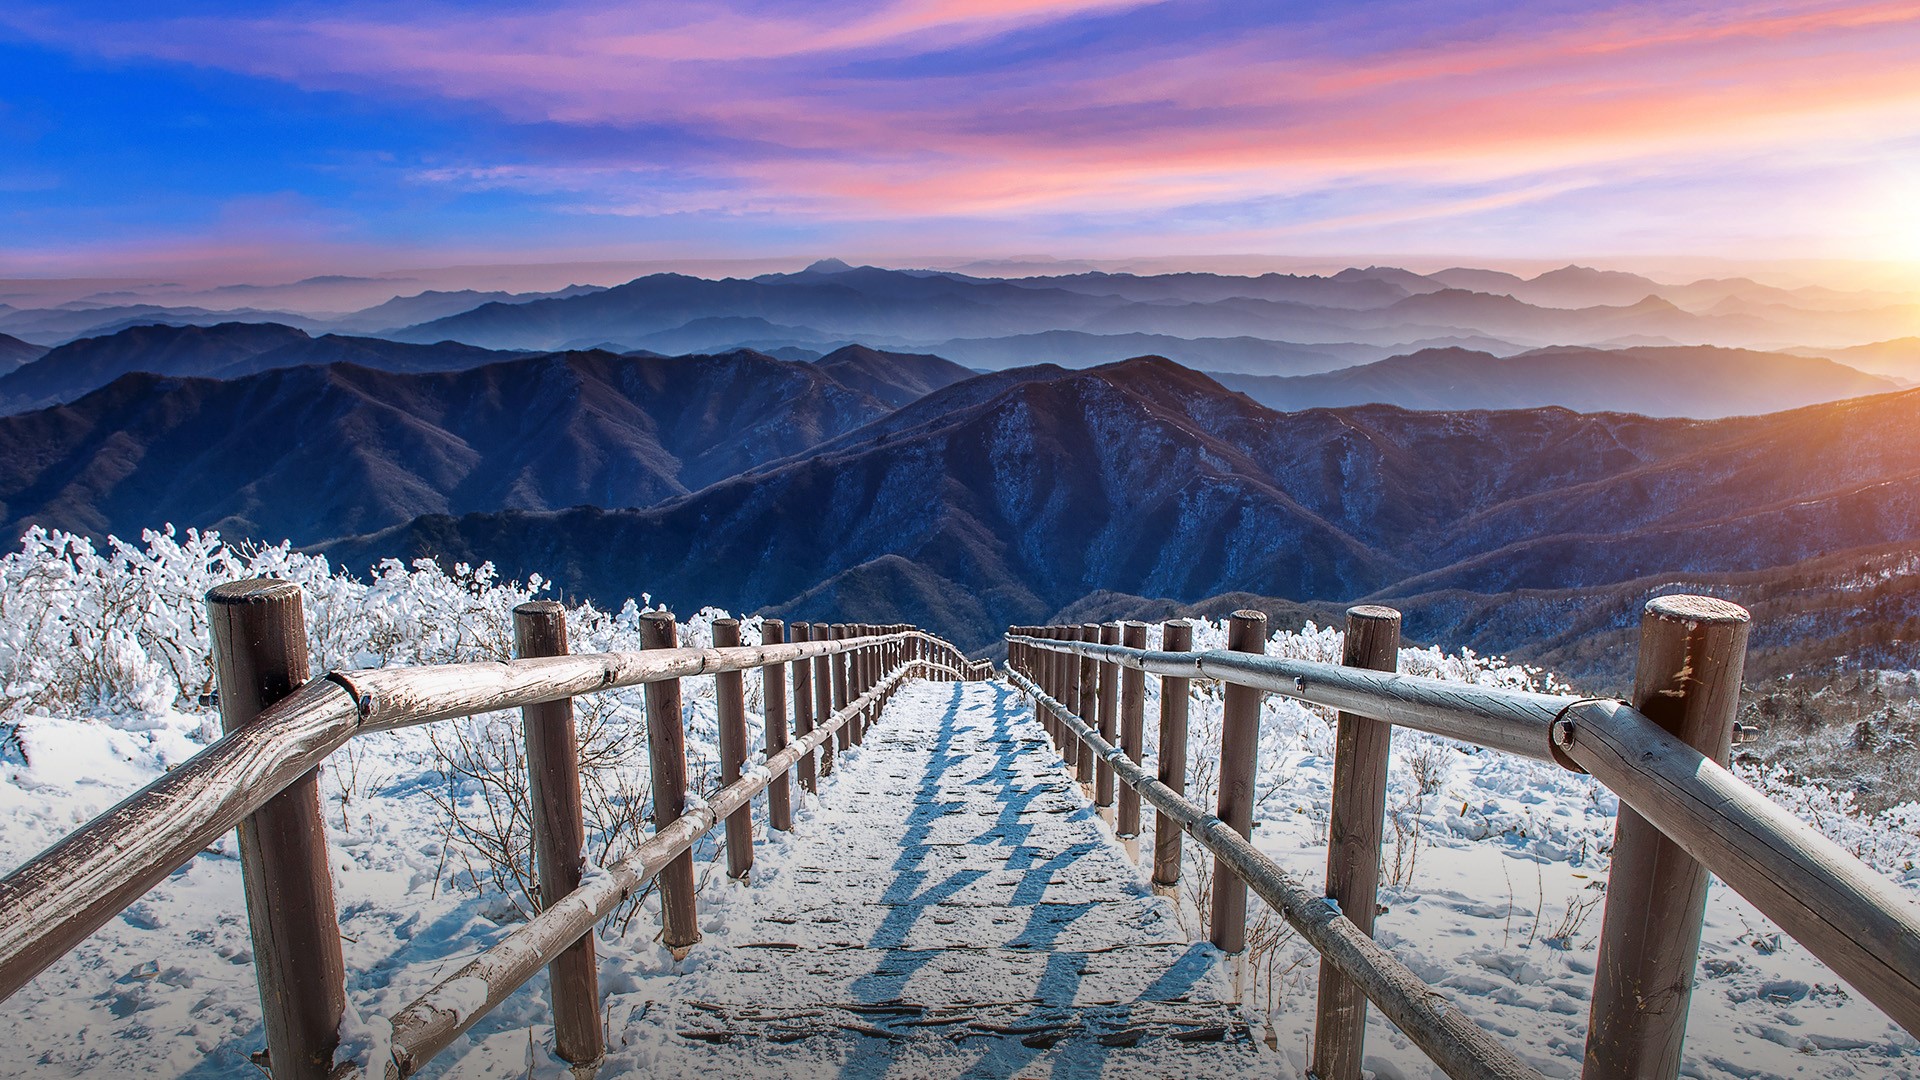 General 1920x1080 landscape nature mountains snow fence clouds sky dawn path stairs plants mist Deogyusan South Korea